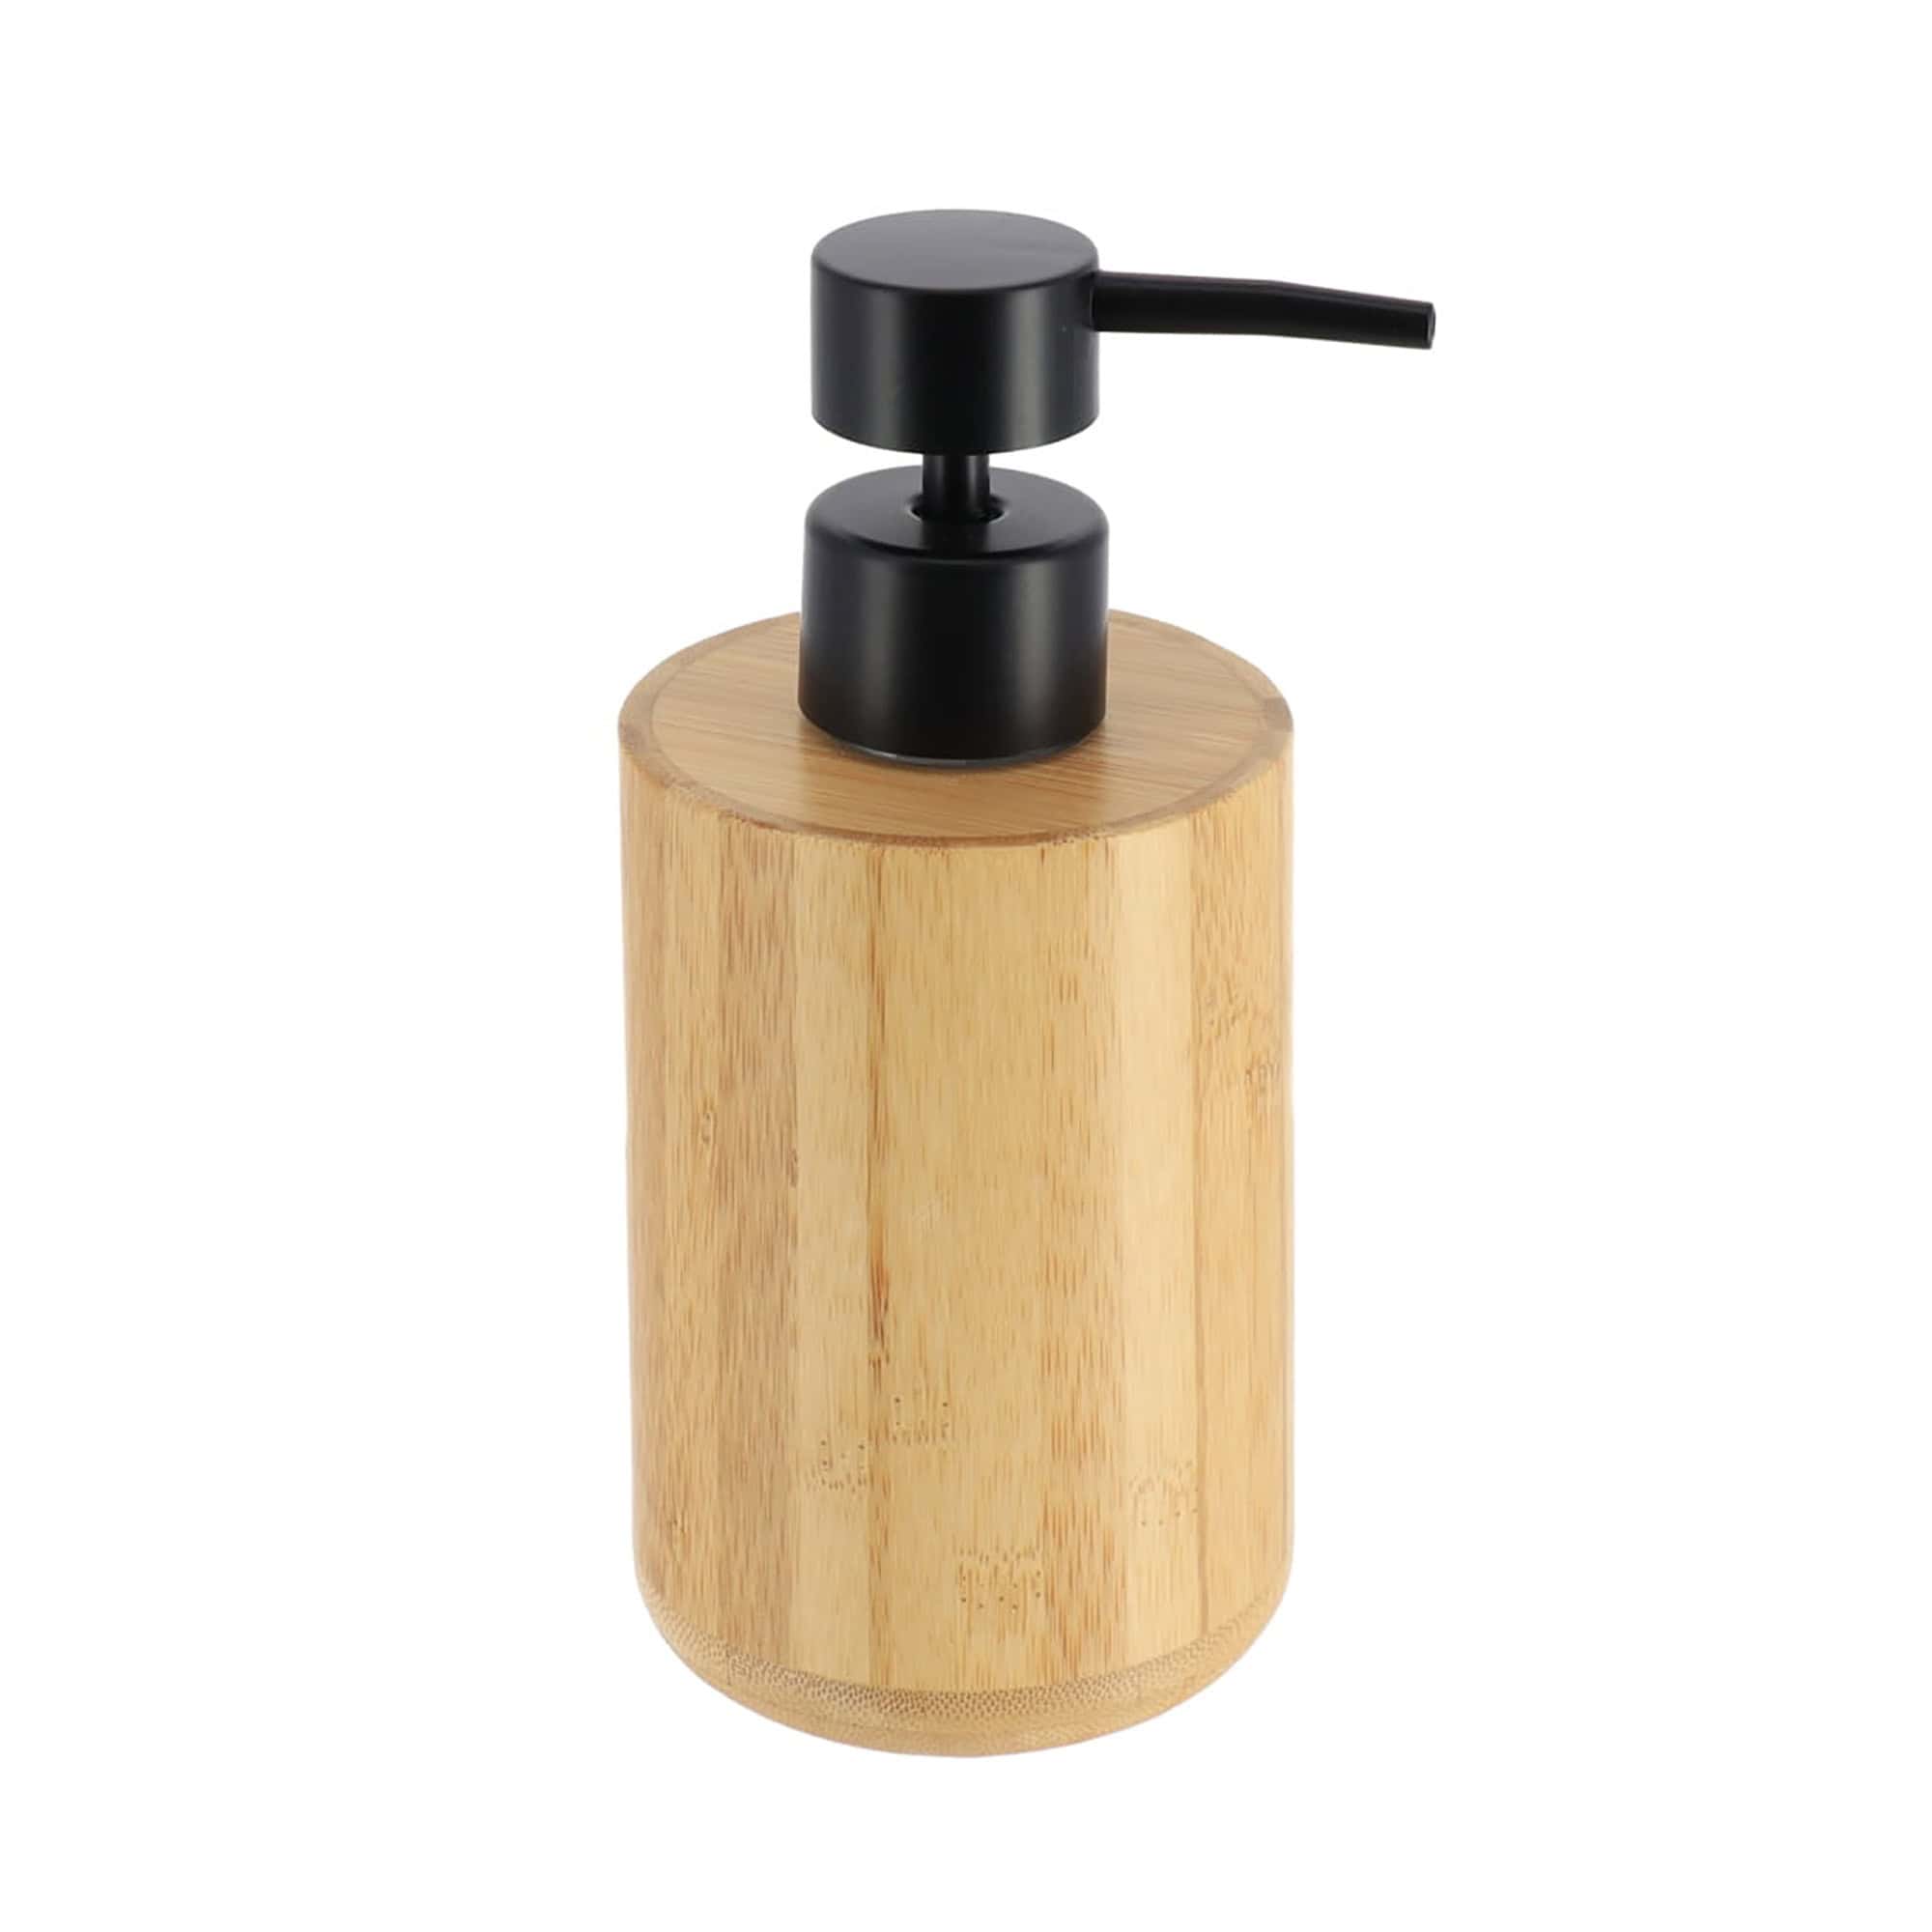 Soap dispenser in natural bamboo, black pump